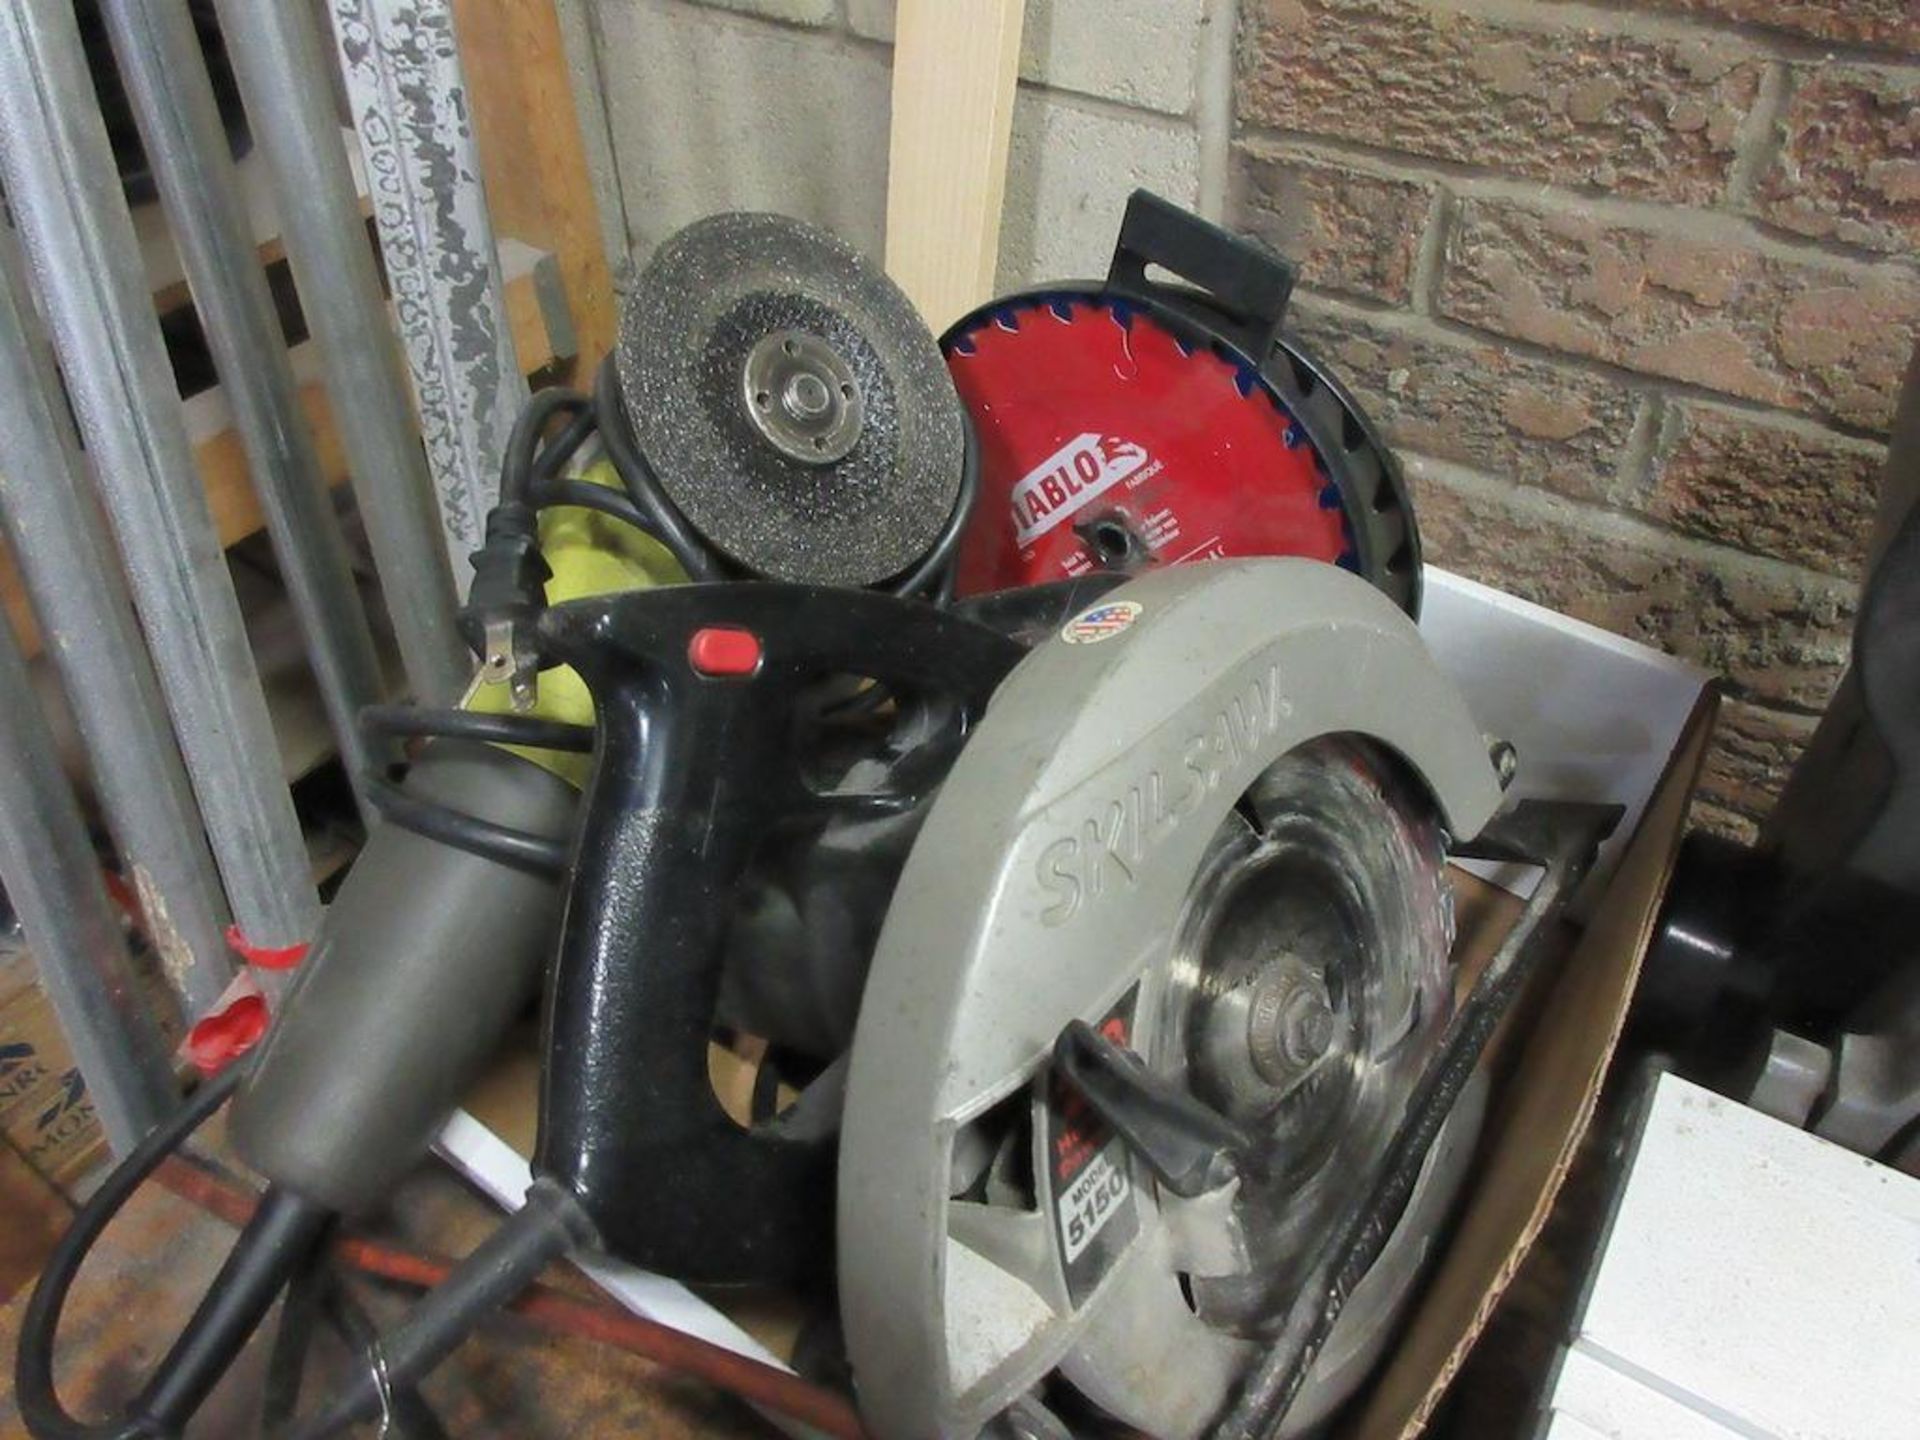 Lot power tools including: King canada 4' x 36" belt and 6" disc sander, Ryobi angle grinder, skilsa - Image 4 of 5